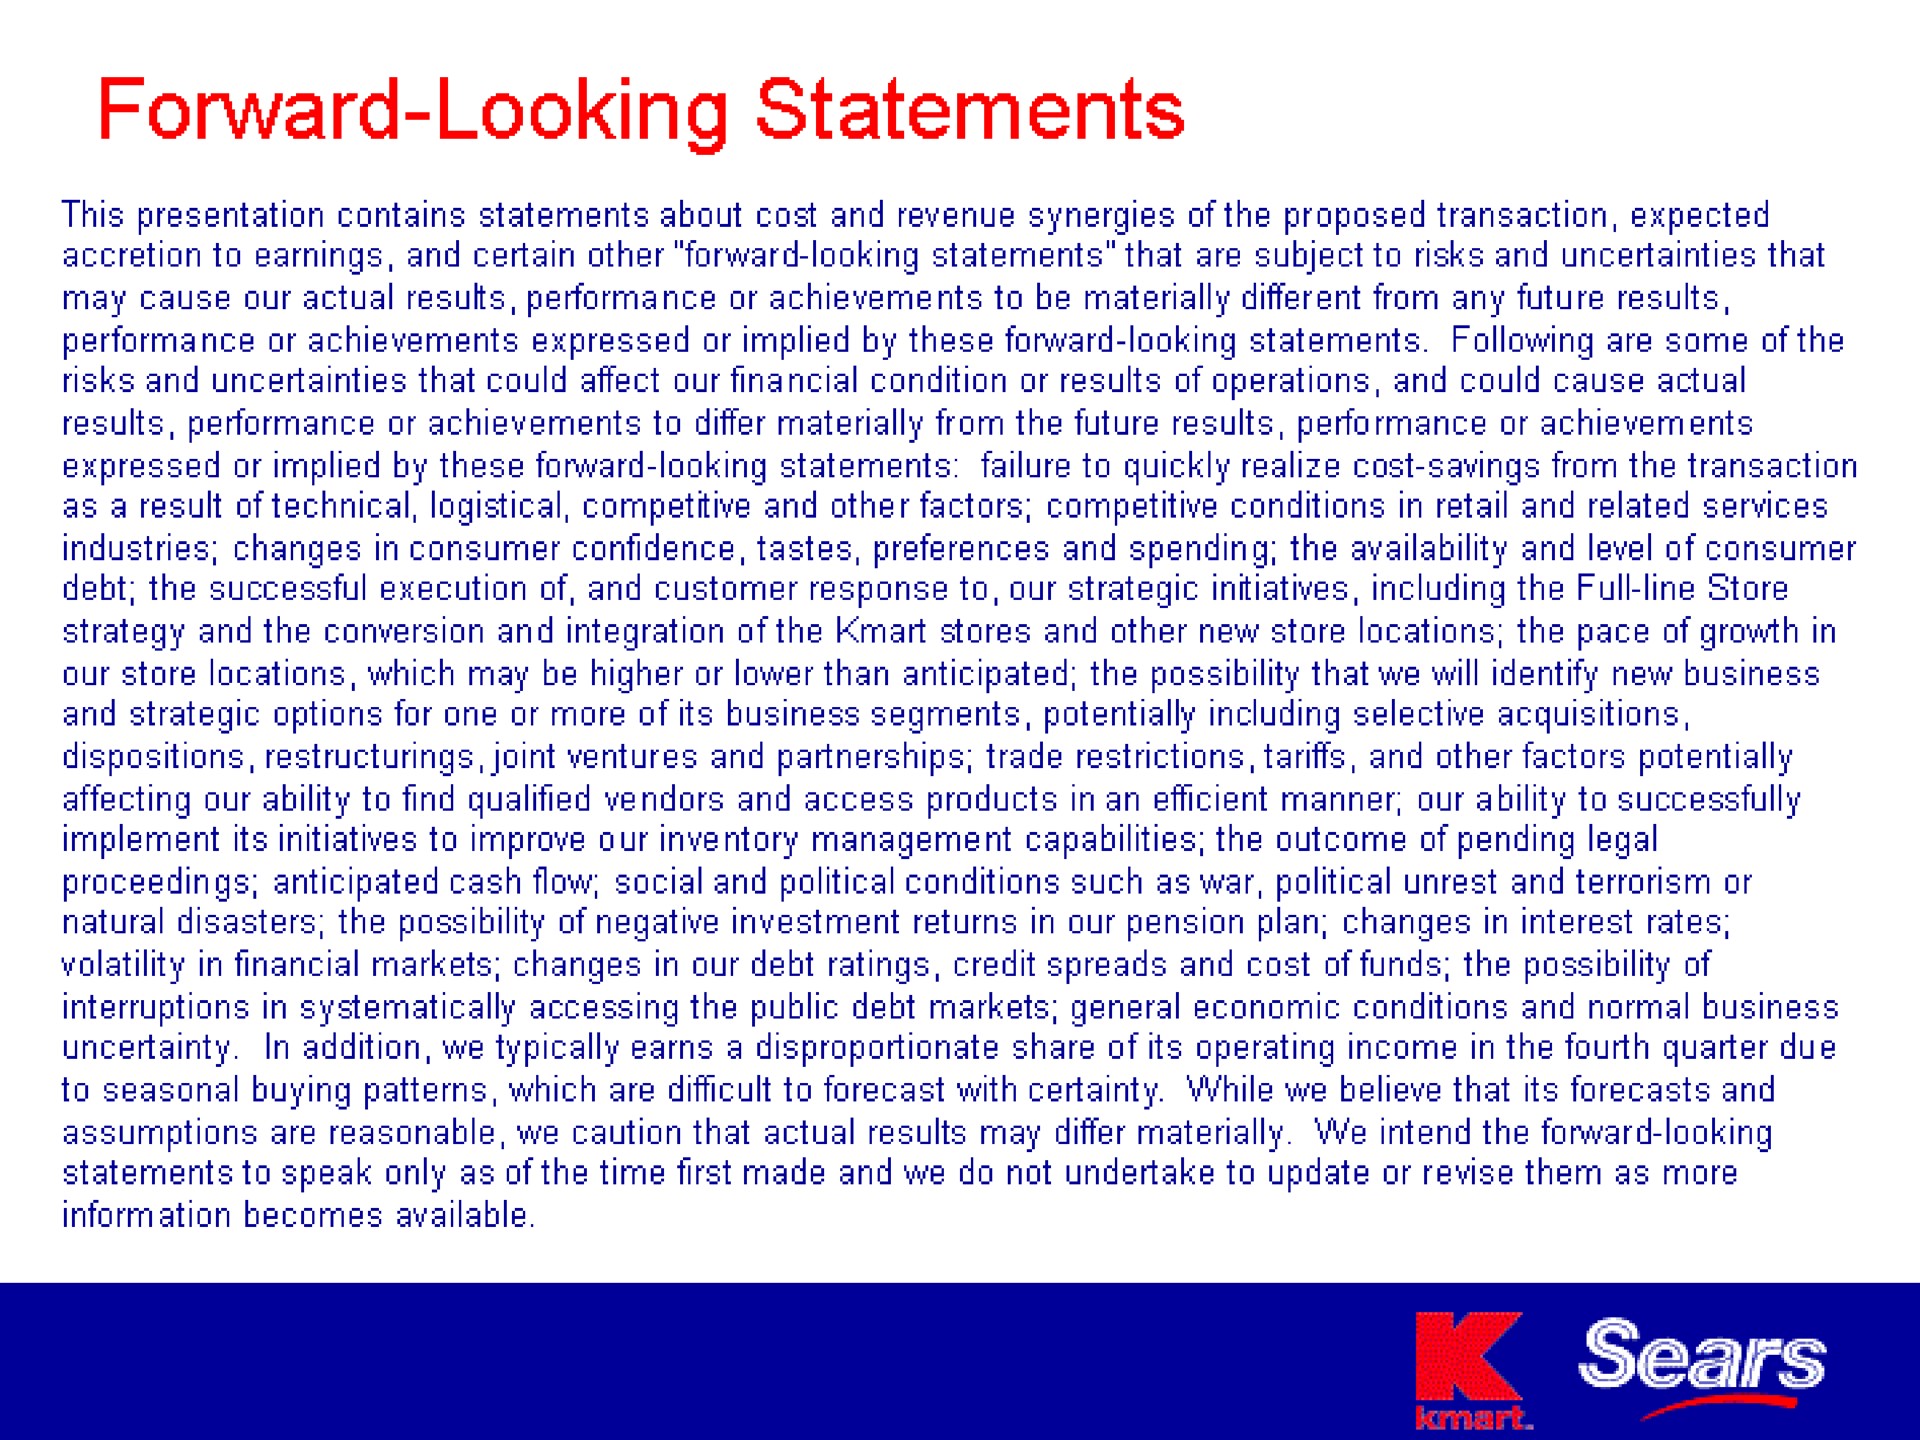 forward looking statements sears | Sears